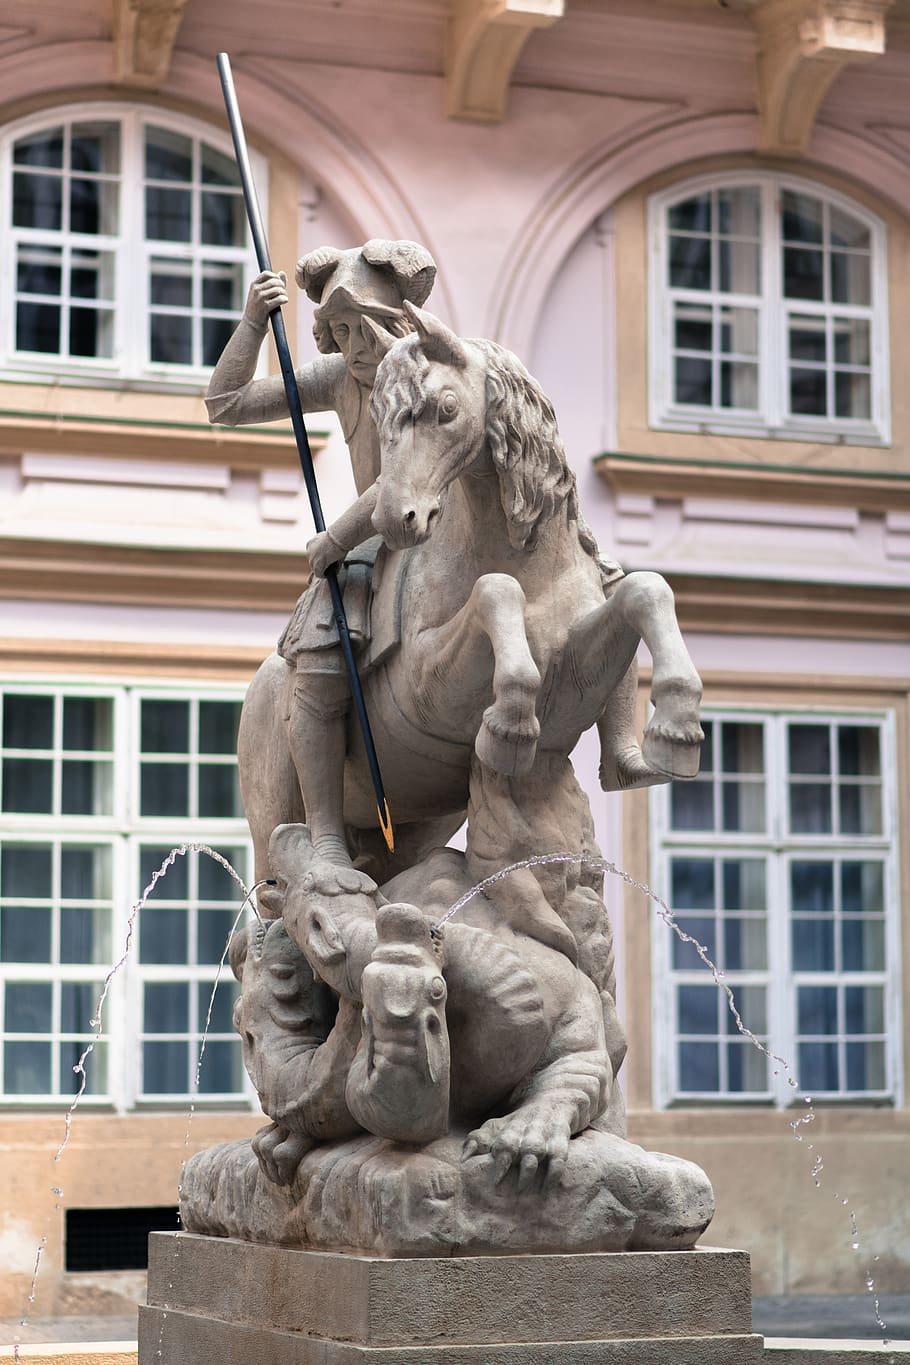 saint george, bratislava, the statue of, fountain, art, slovakia, architecture, sculpture, building exterior, statue